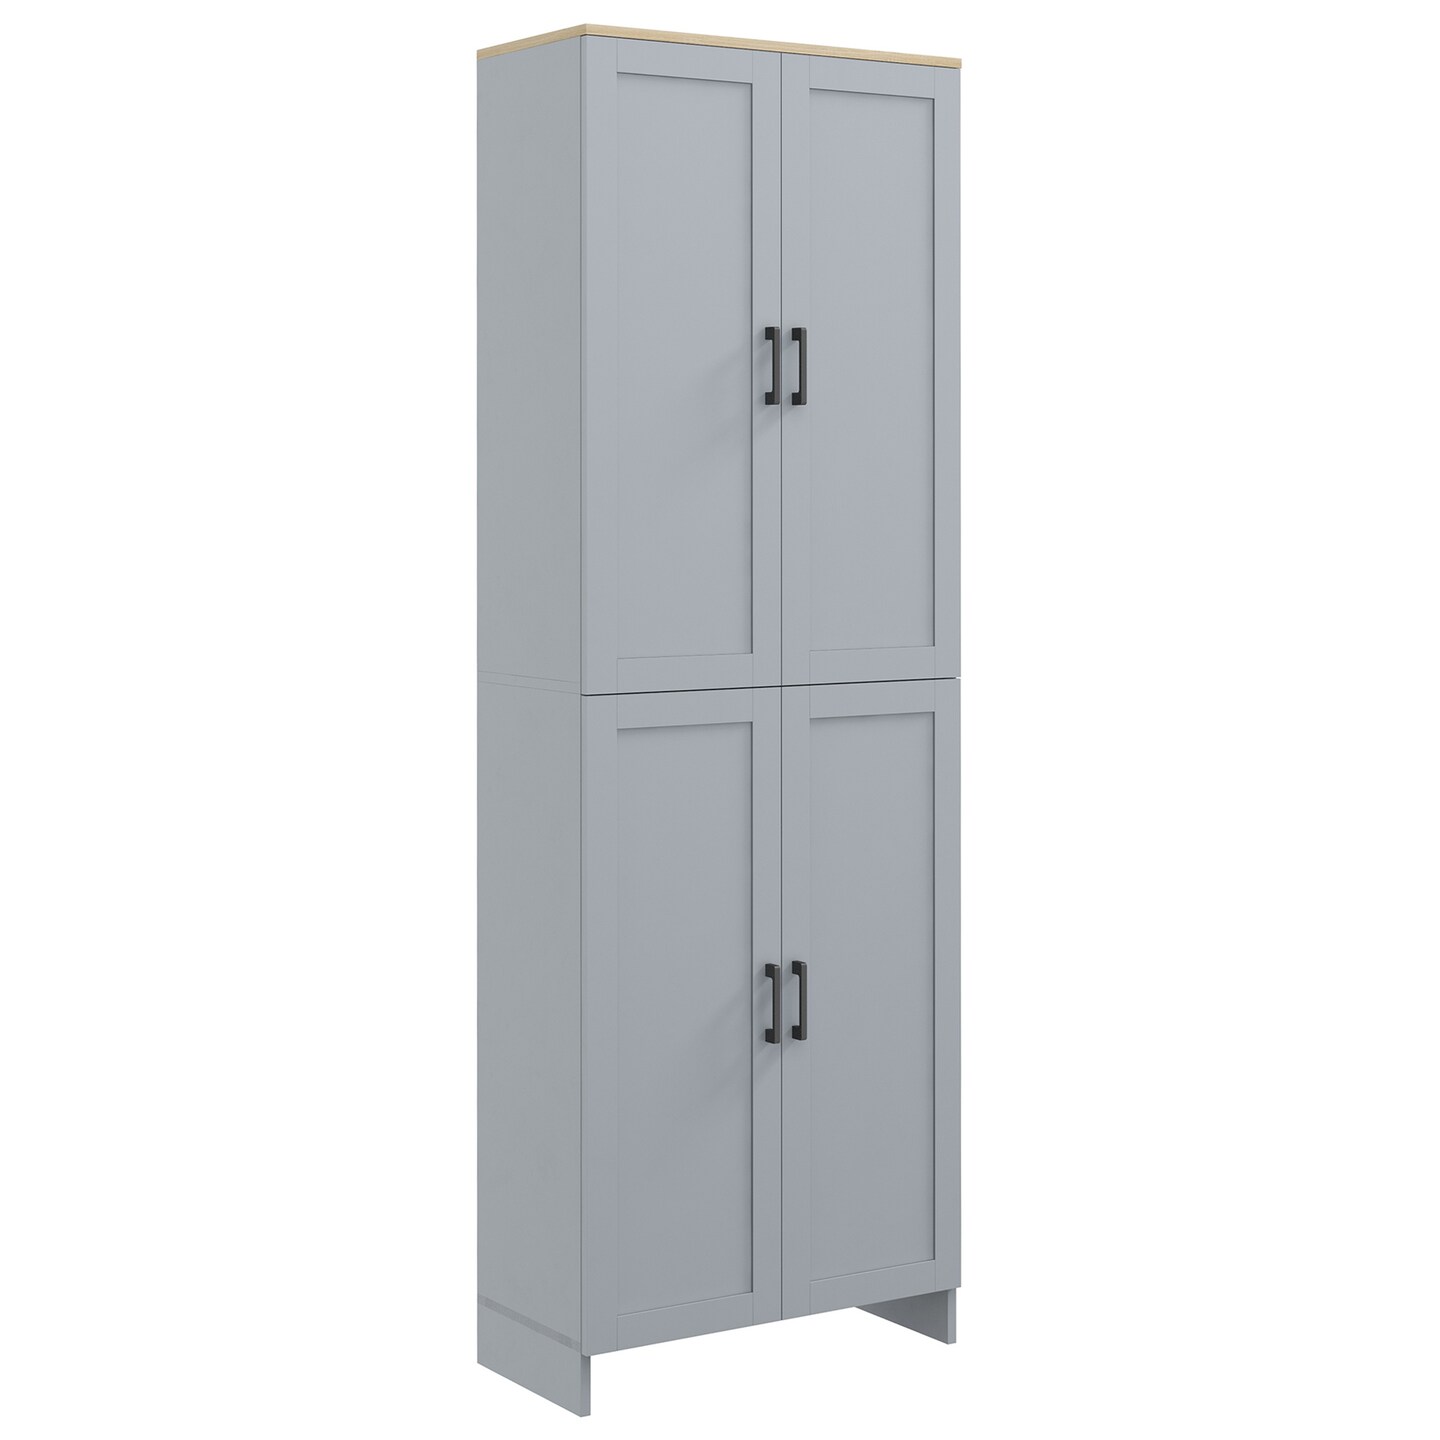 Adjustable Shelves Kitchen Pantry with 4 Doors - 75.68 | Organize Stylishly